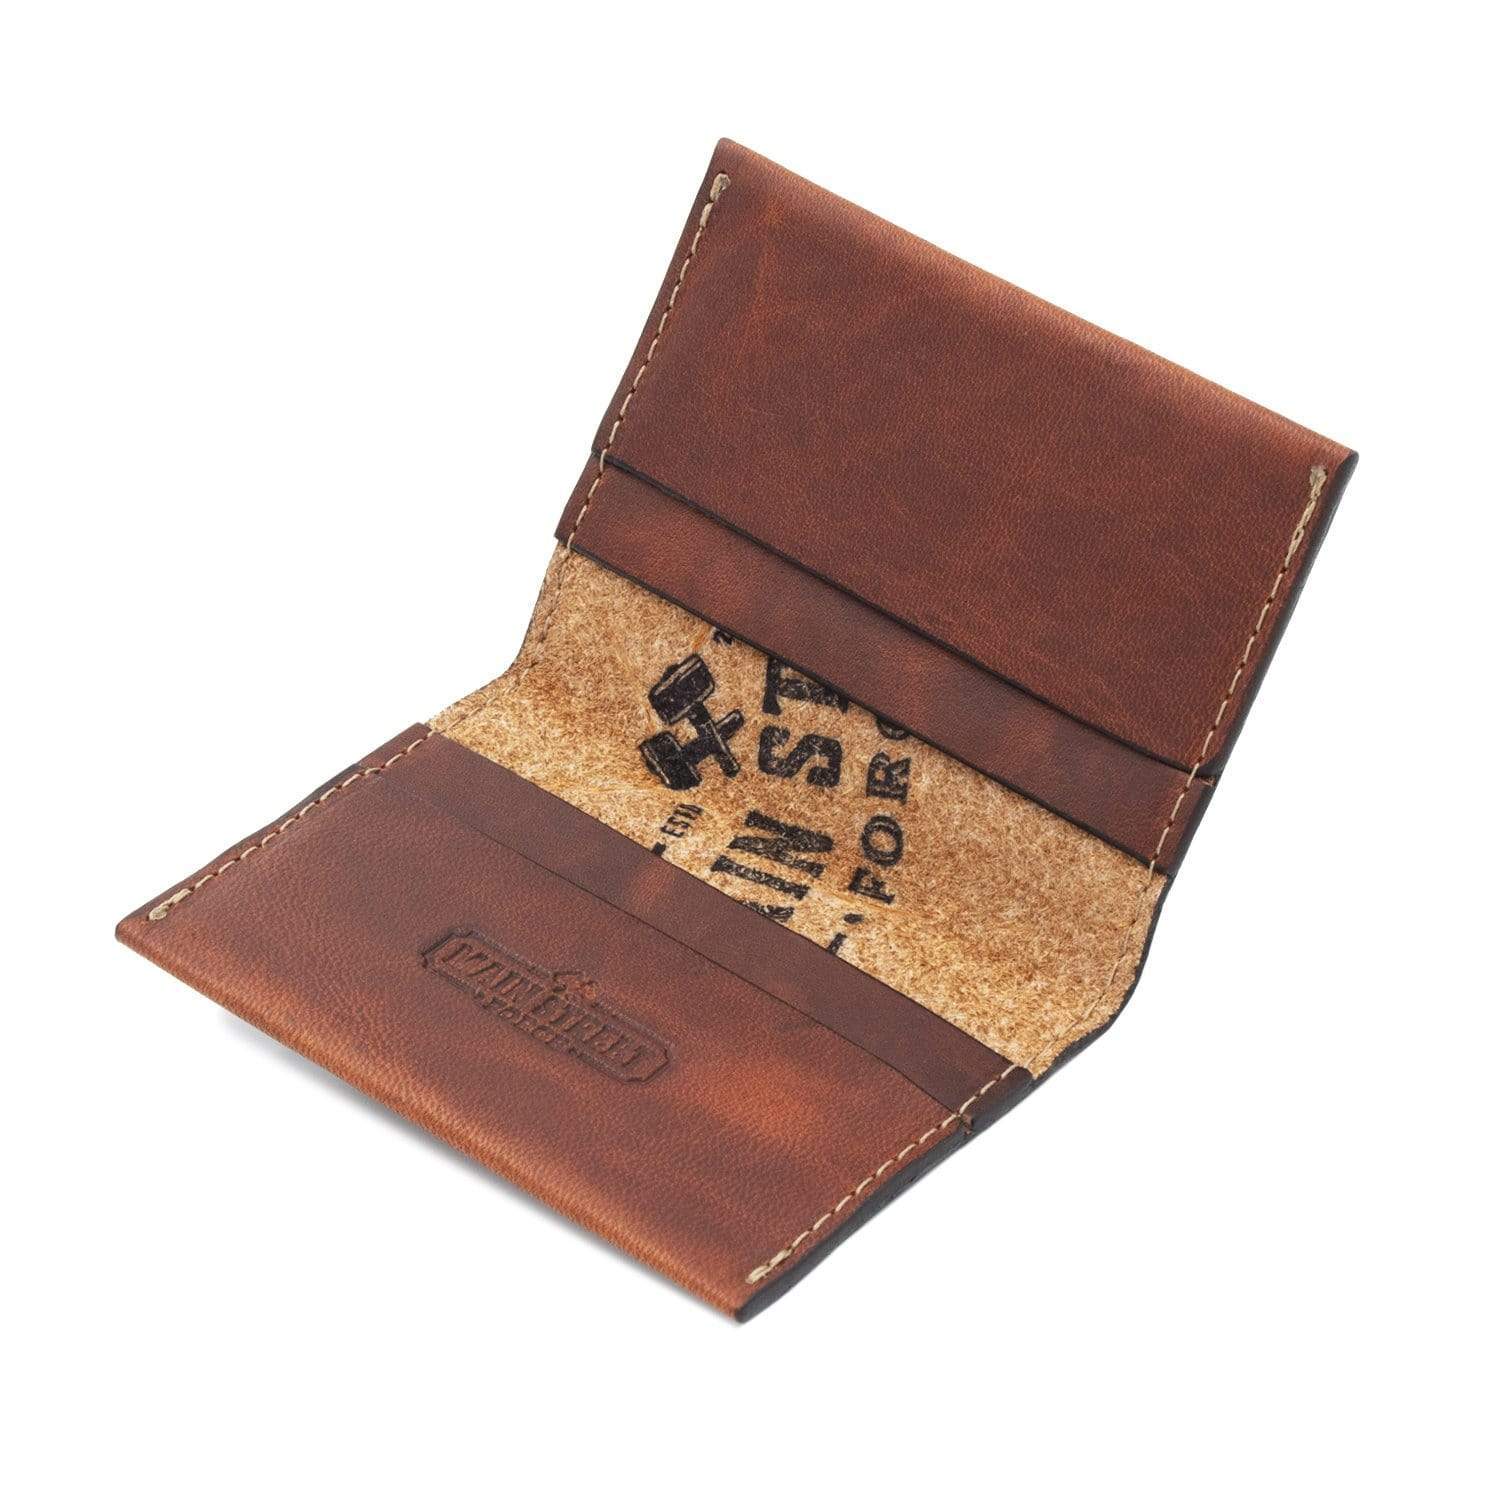 Leather card holder